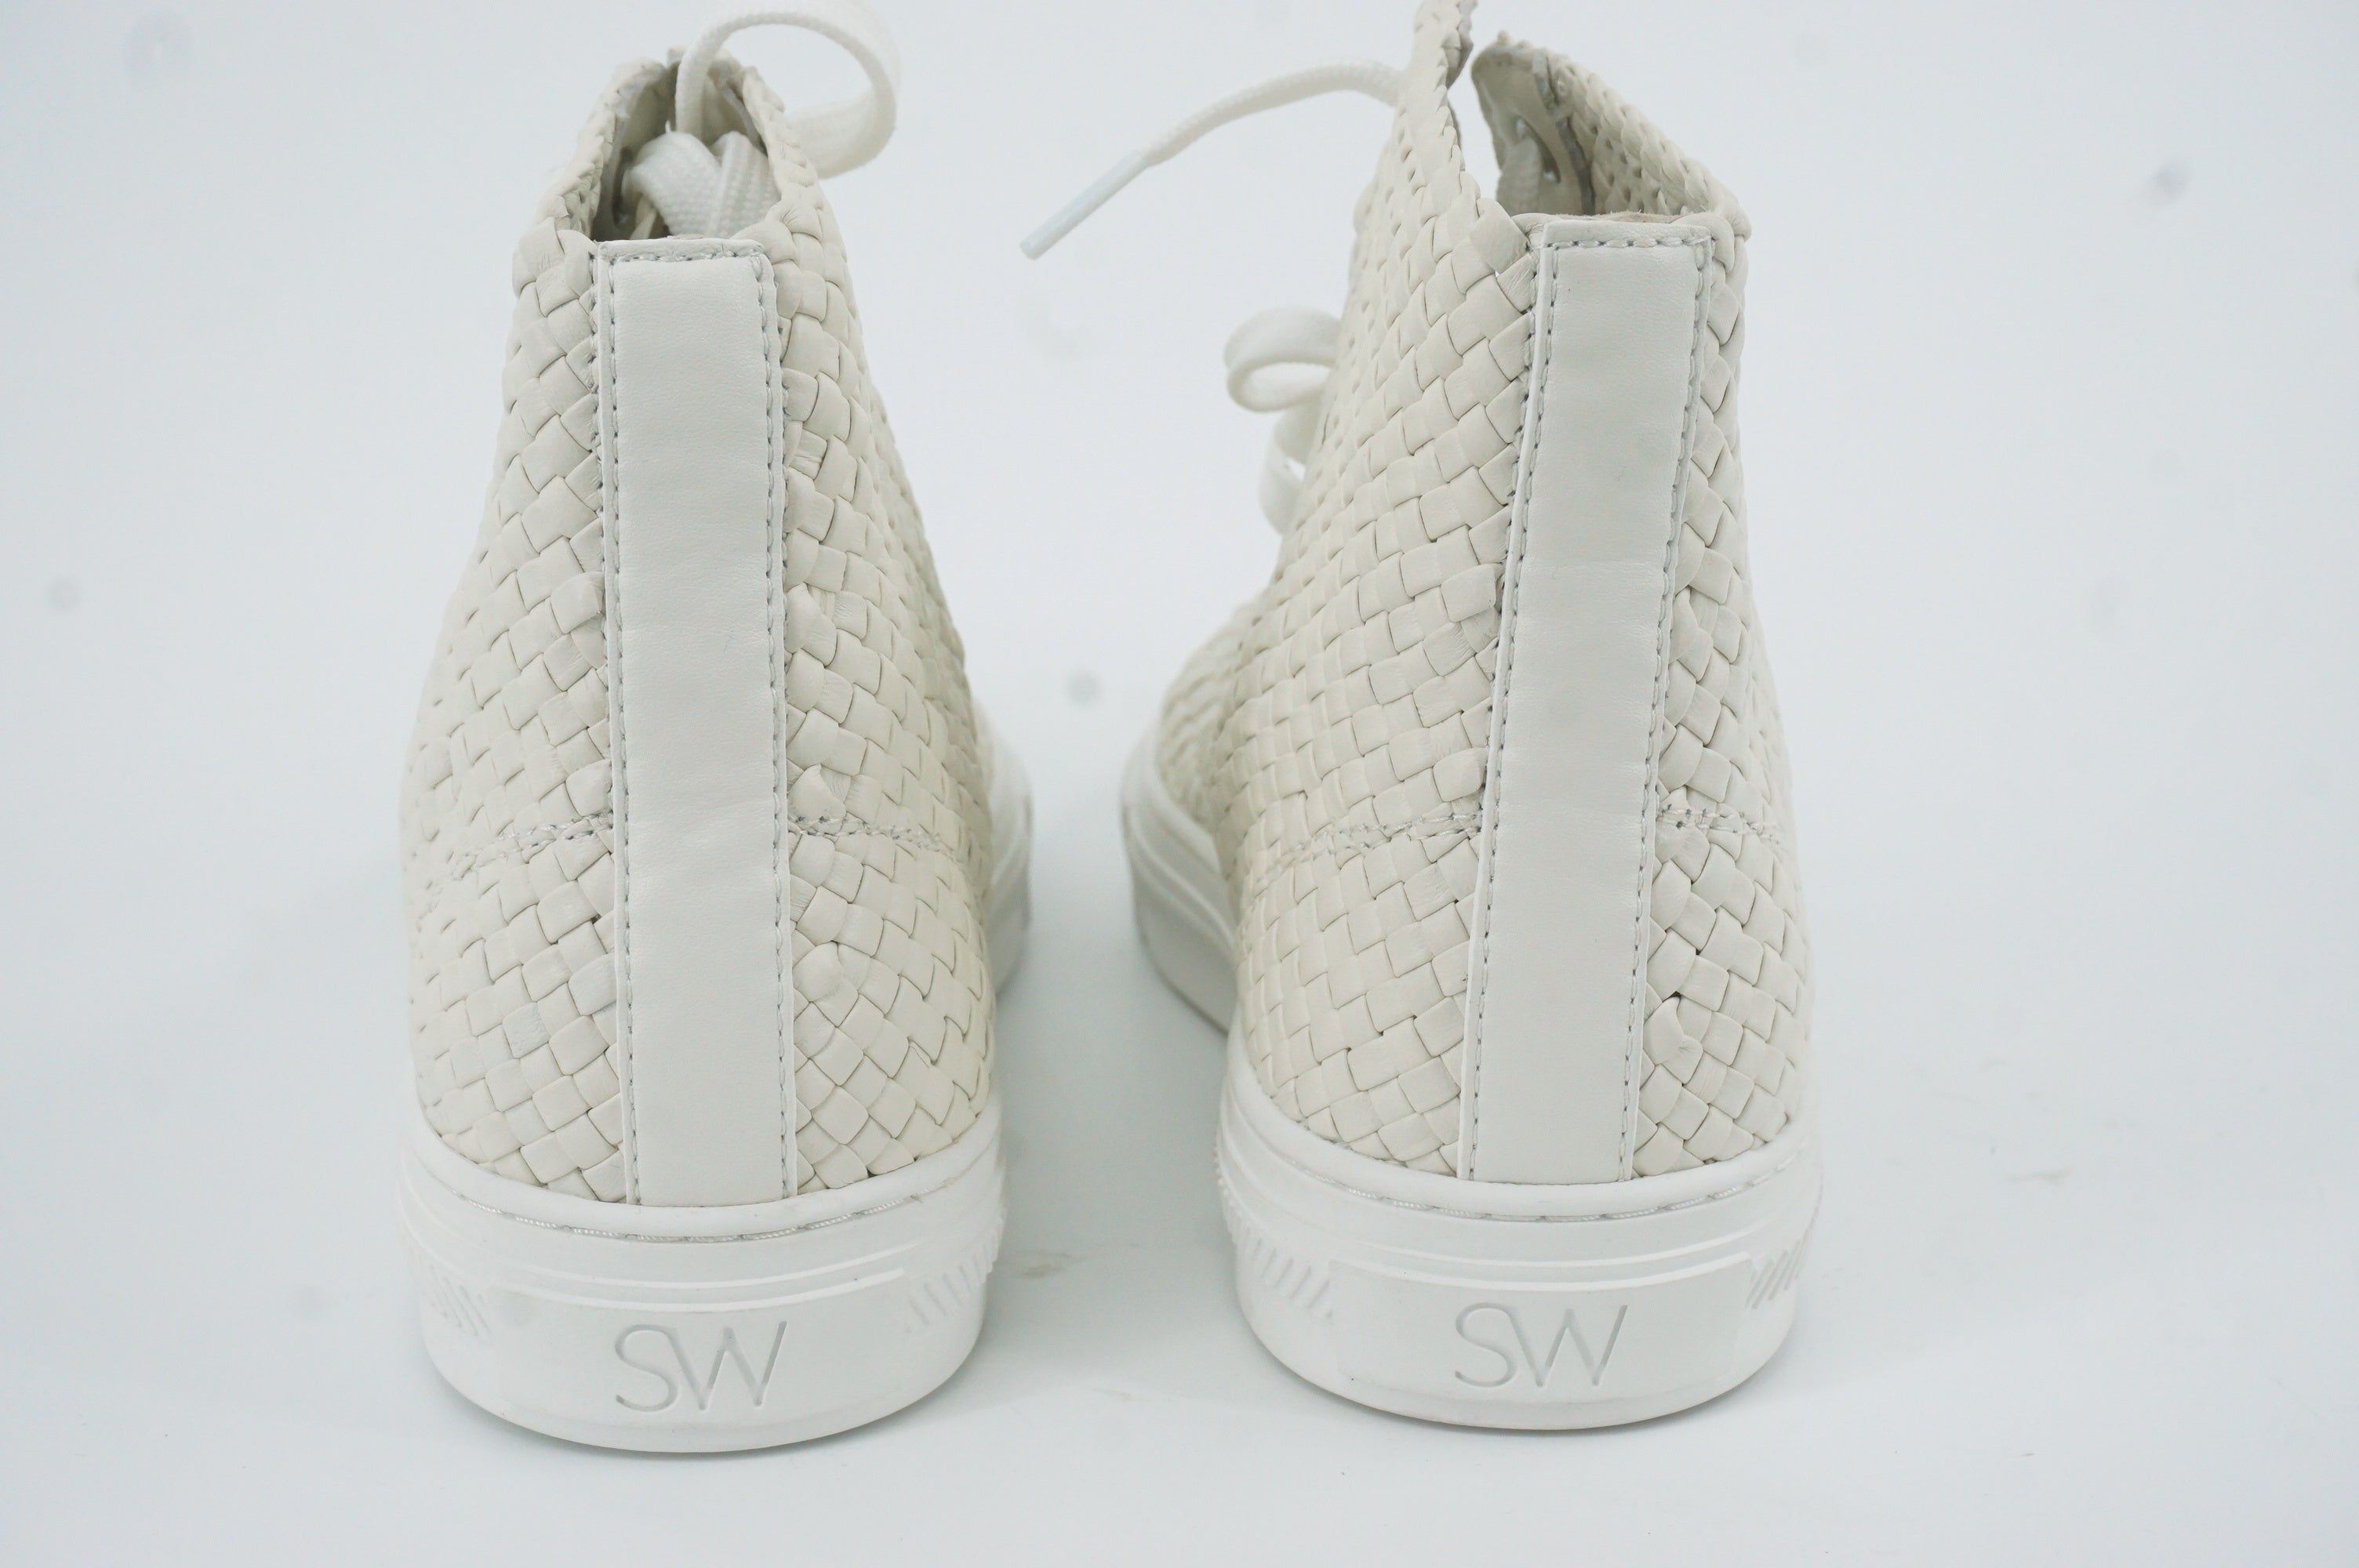 Stuart Weitzman Wova Woven Cream Leather High Top Flat Sneakers Size 9 New $495